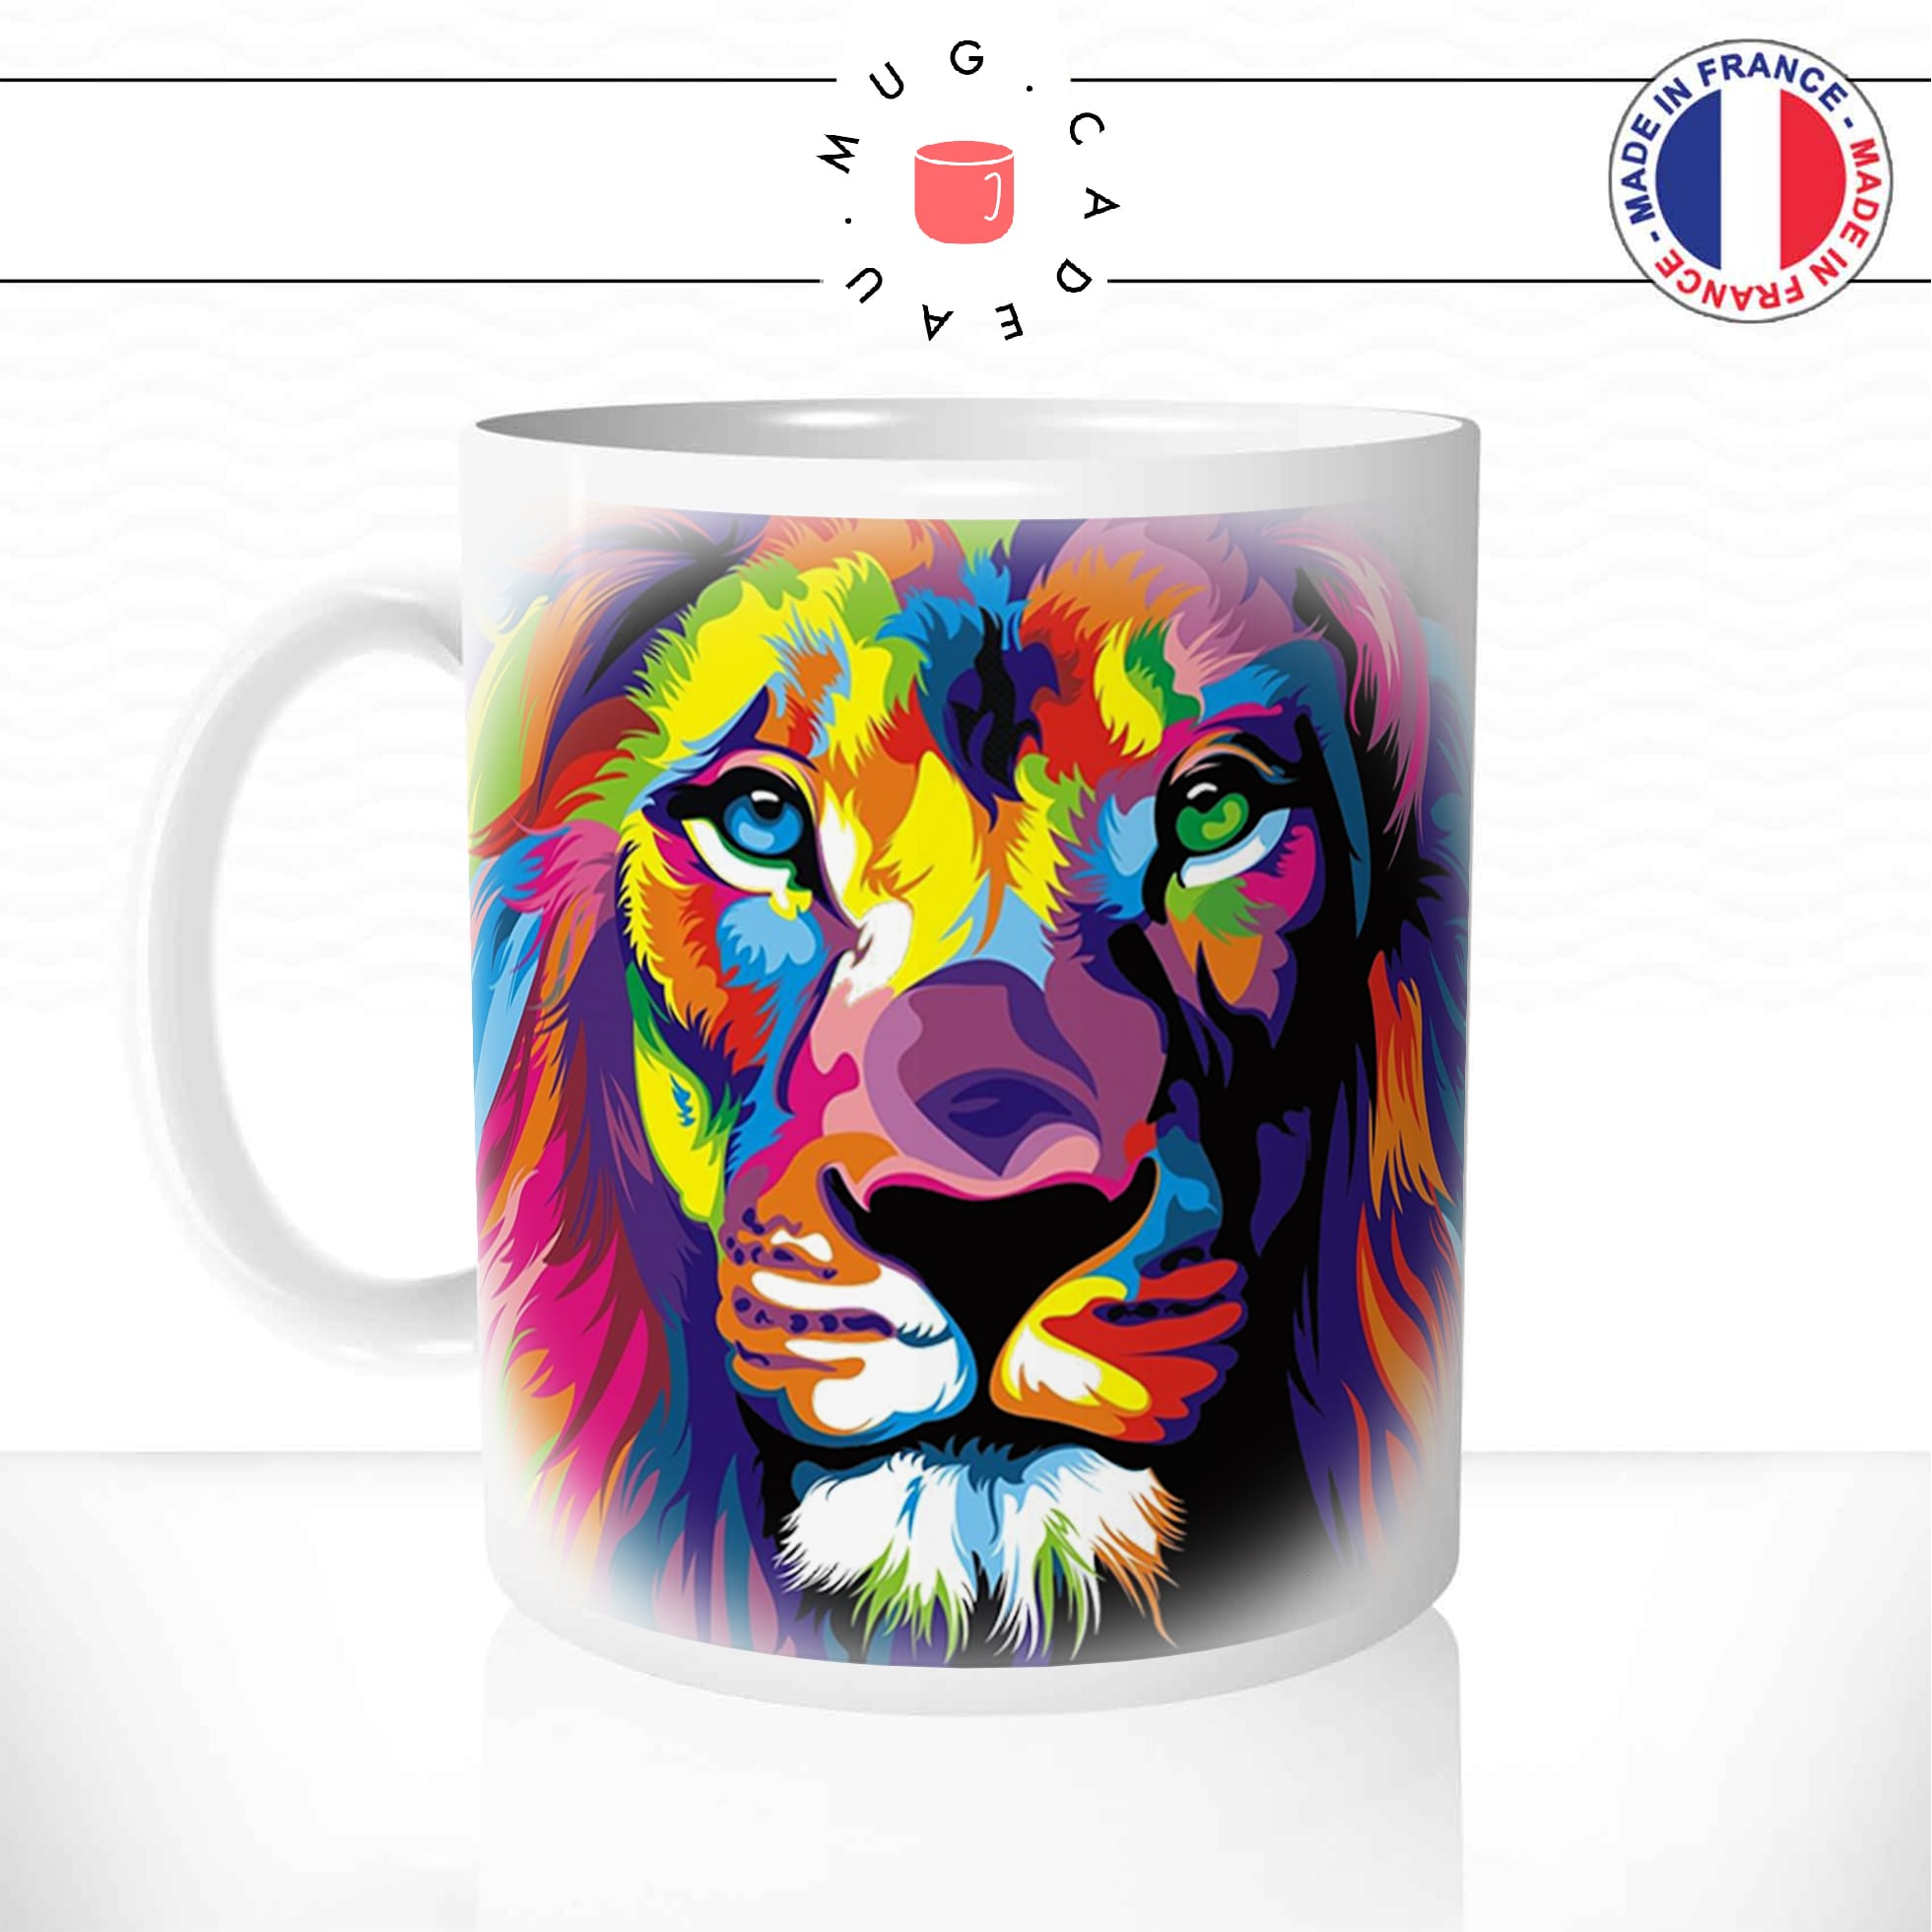 mug-tasse-ref2-lion-couleurs-halo-cafe-the-mugs-tasses-personnalise-personnalisable-anse-gauche-min